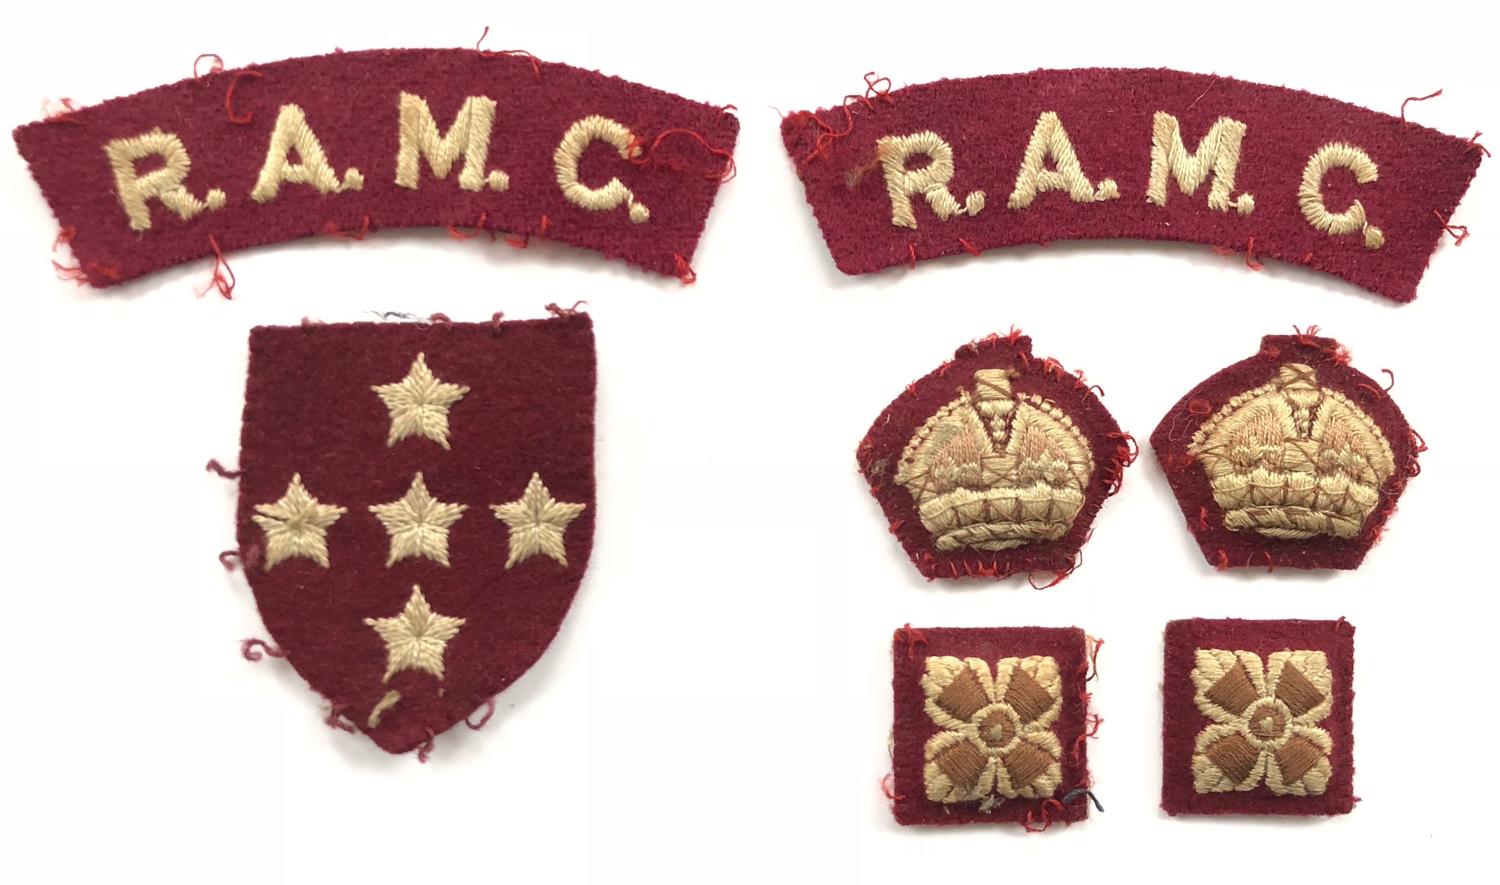 WW2 Period RAMC Officer's Cloth Badges.